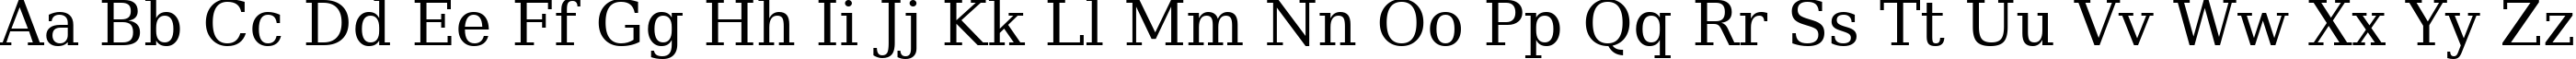 Пример написания английского алфавита шрифтом ae_Graph